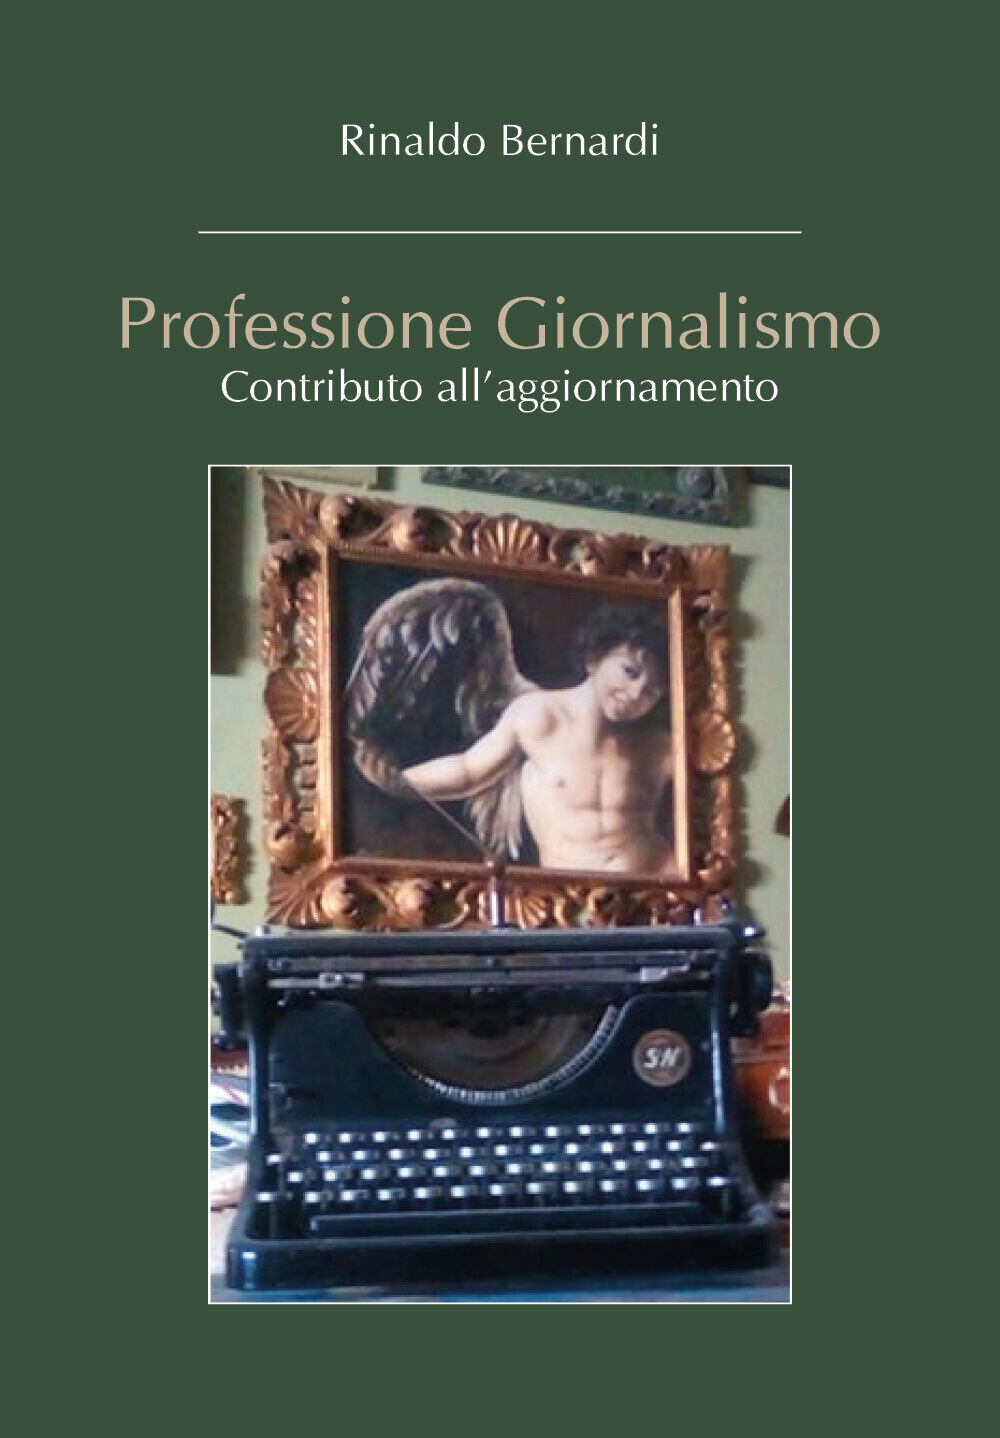 Professione Giornalismo  - Rinaldo Bernardi,  2019,  Youcanprint - ER